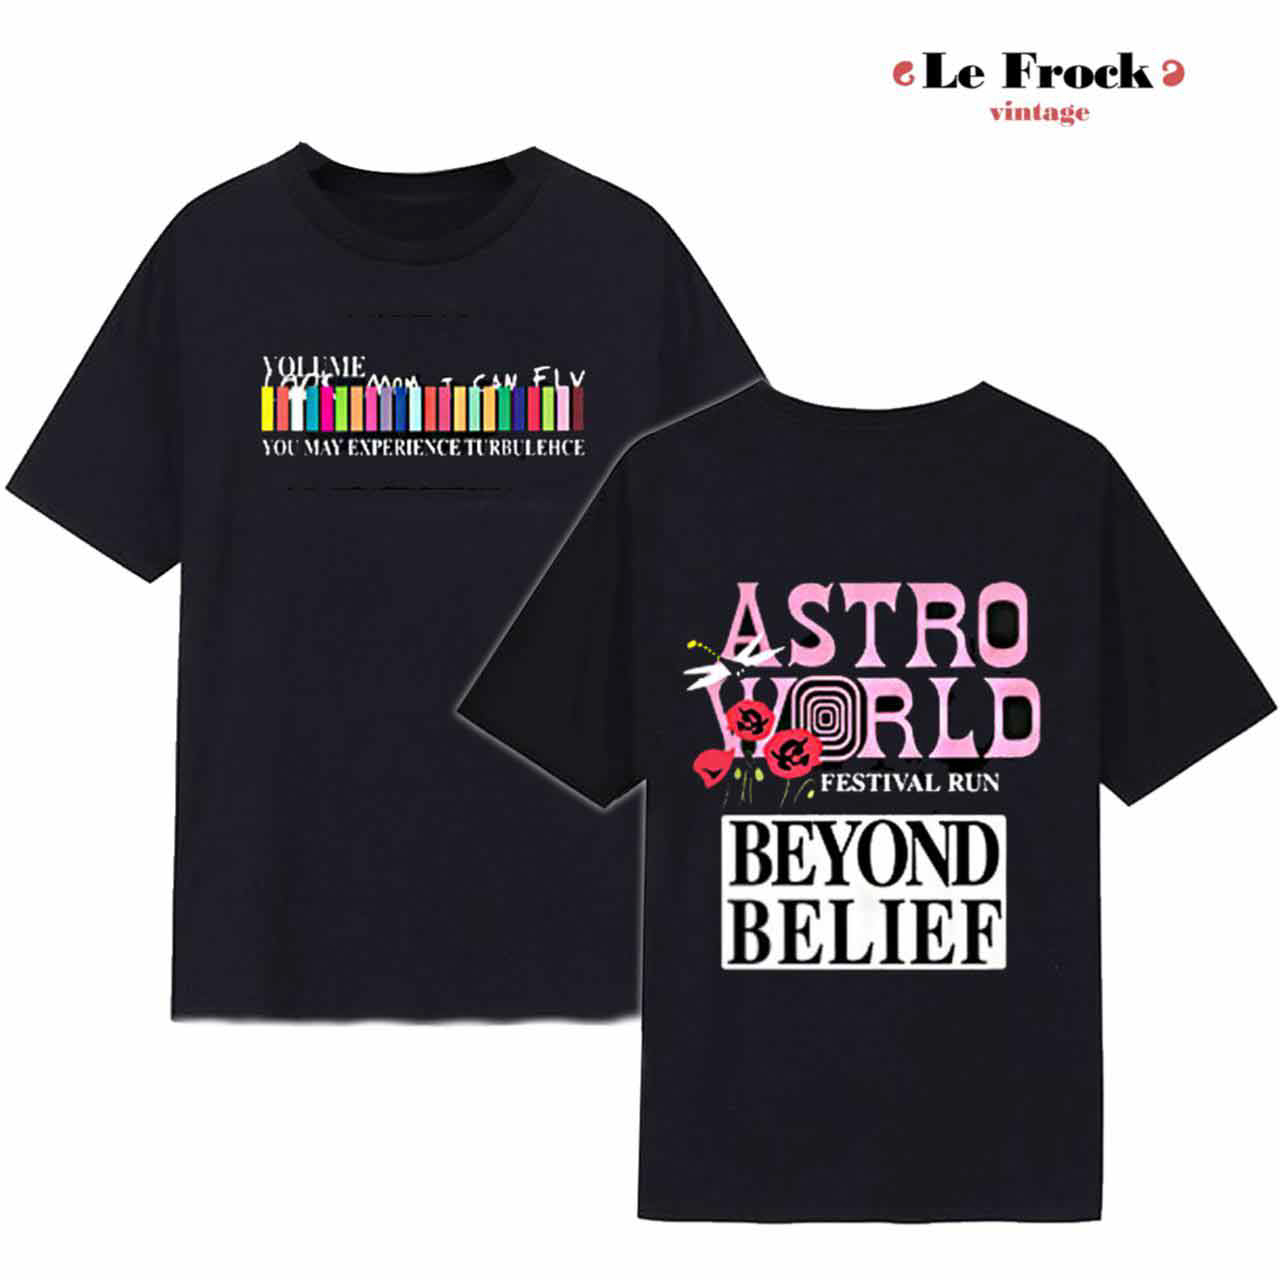 Astroworld Beyond Belief T-Shirt